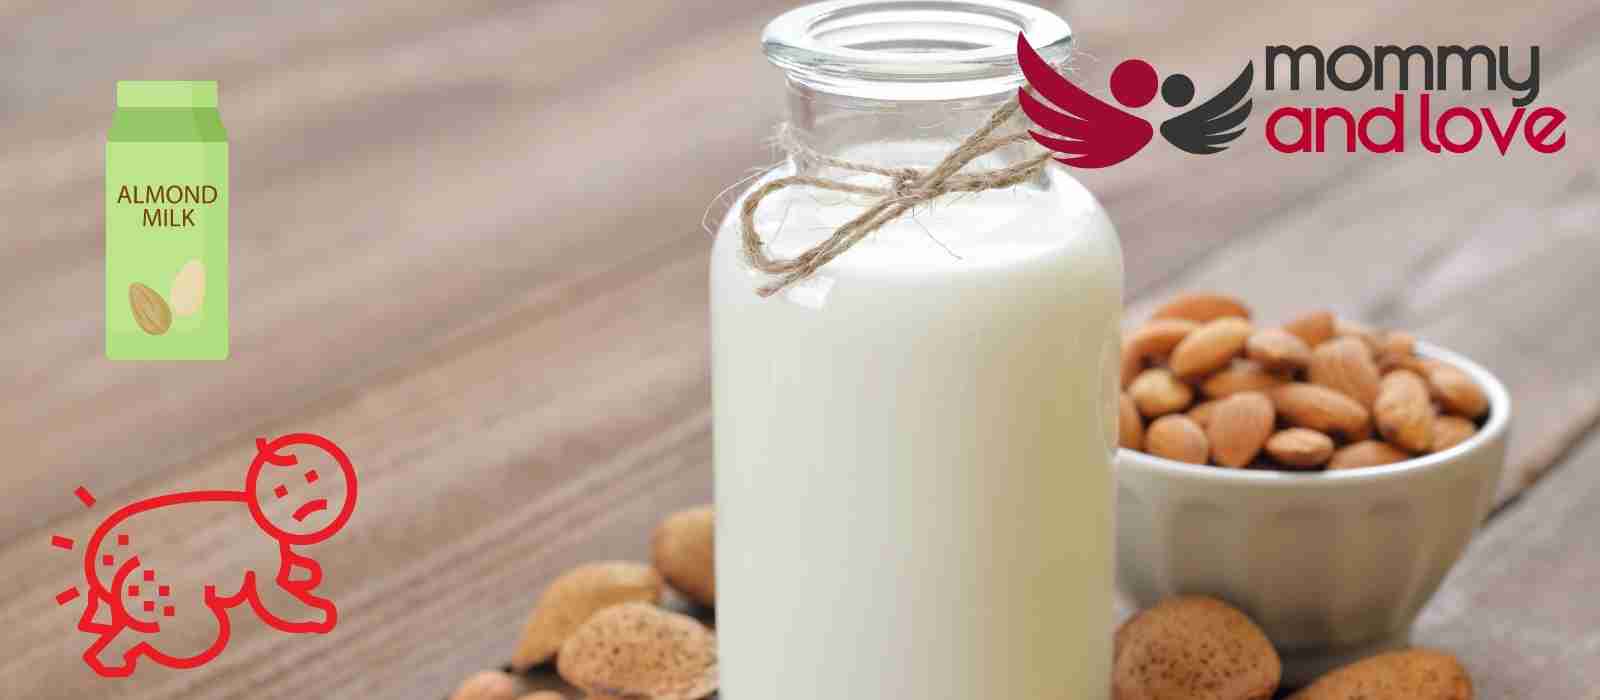 Can Almond Milk Cause Diaper Rash